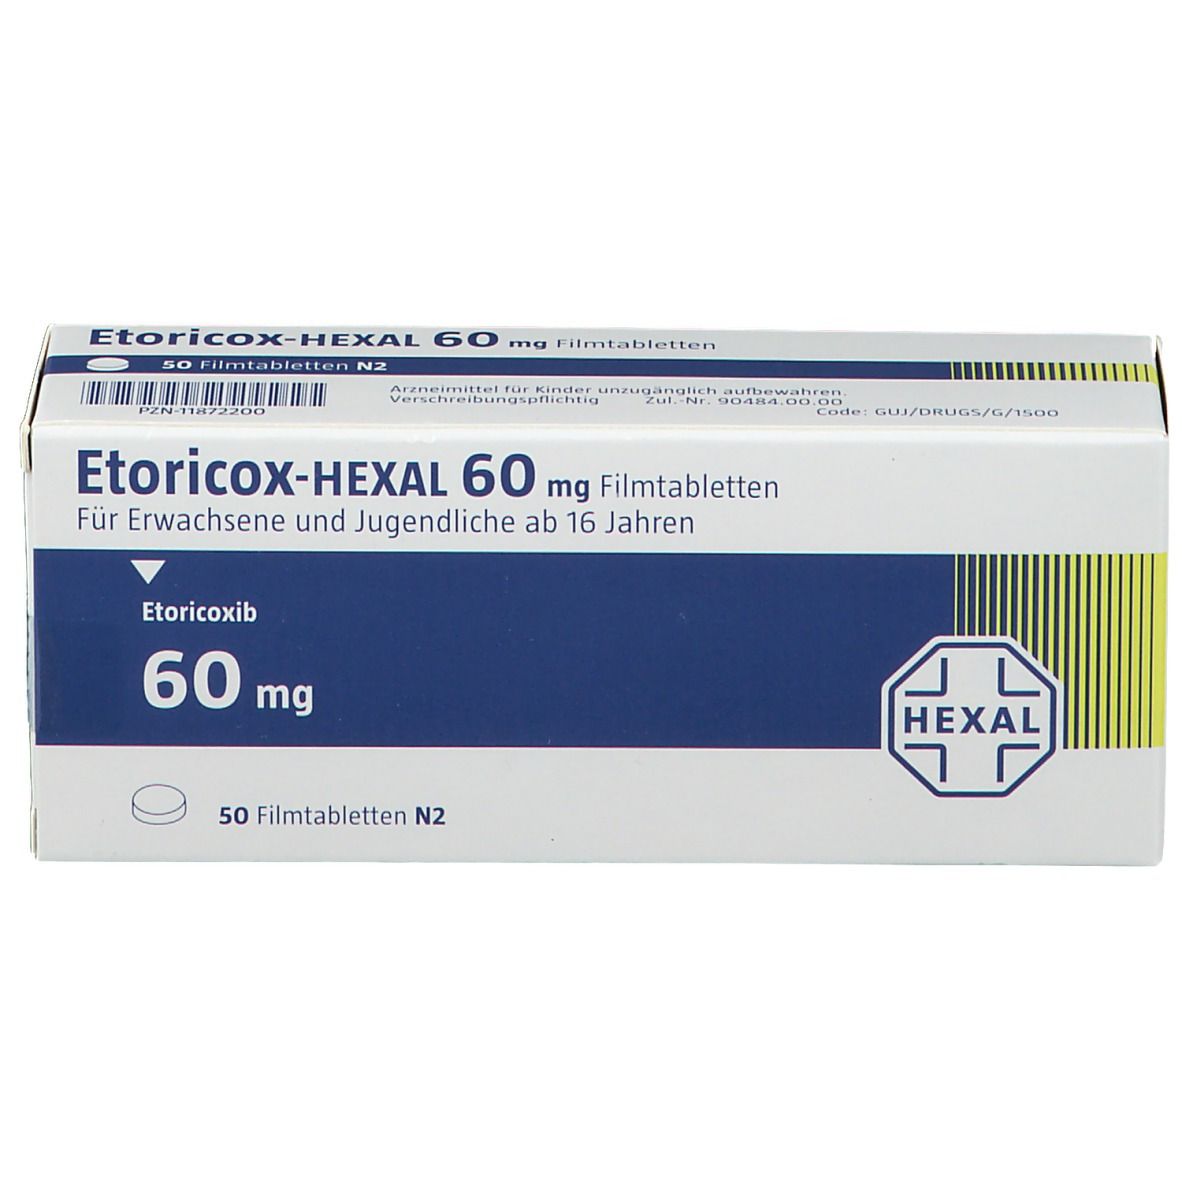 Etoricox-HEXAL 60 mg